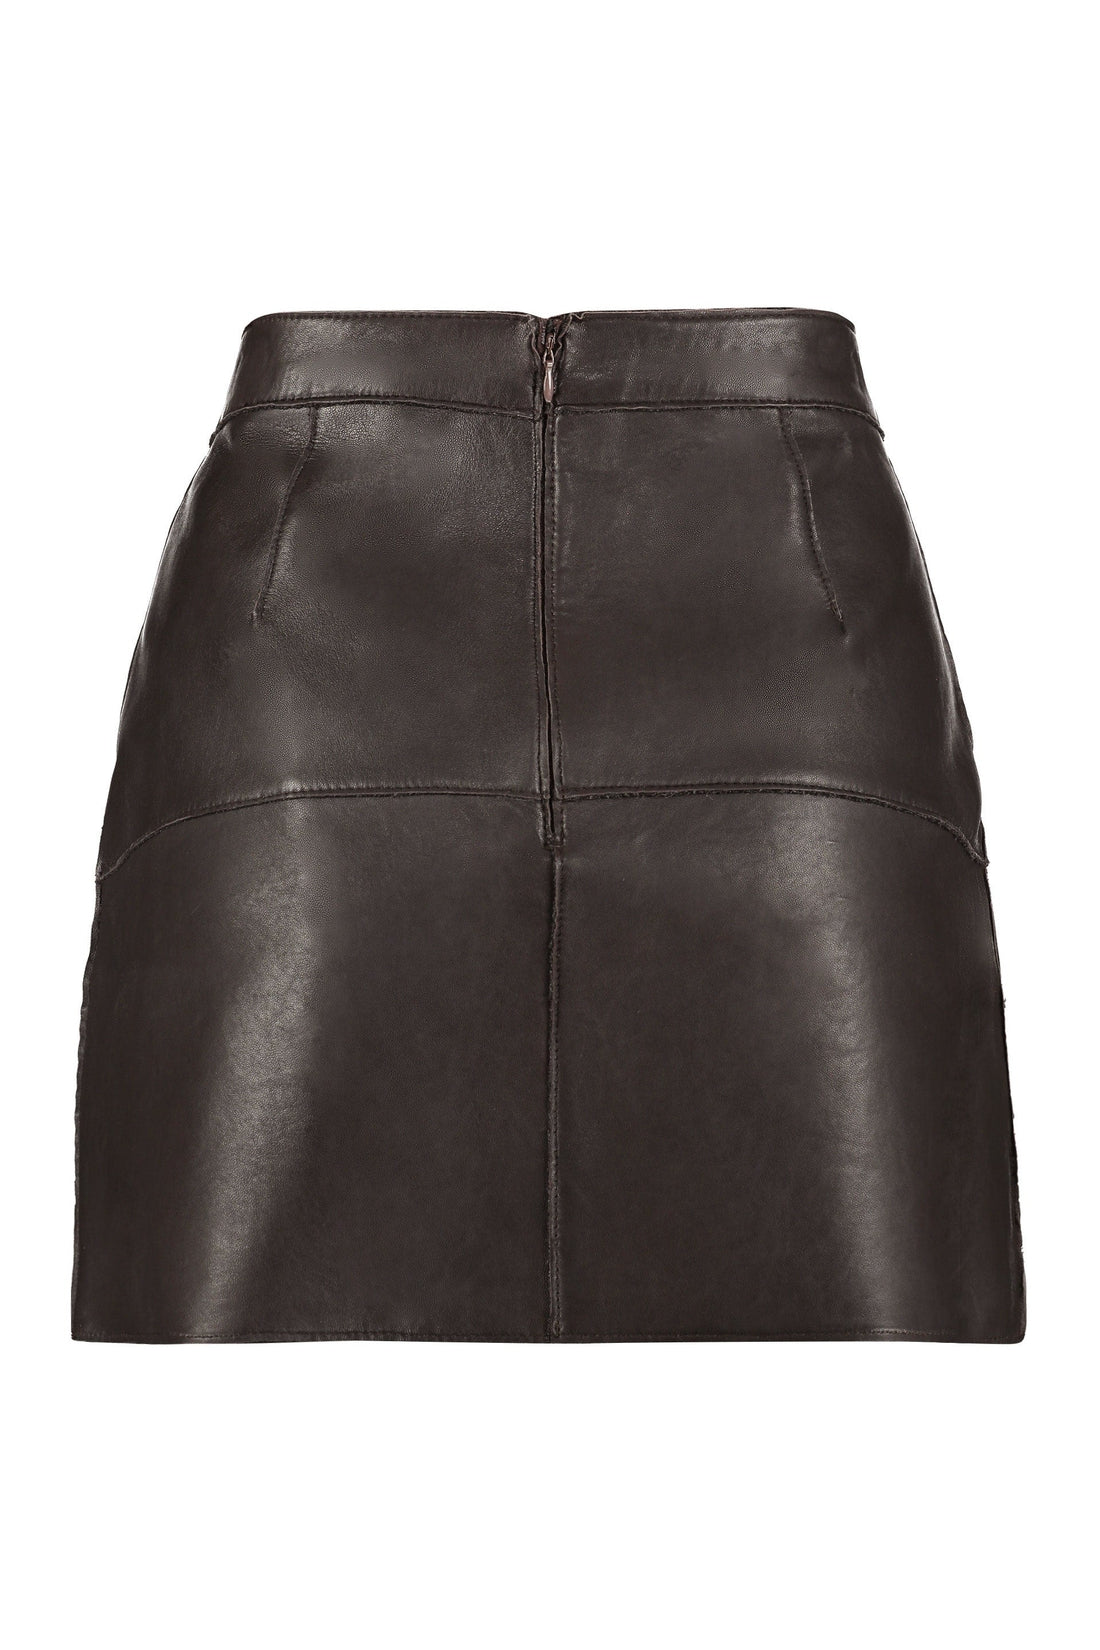 Parosh-OUTLET-SALE-Maciockx leather mini skirt-ARCHIVIST